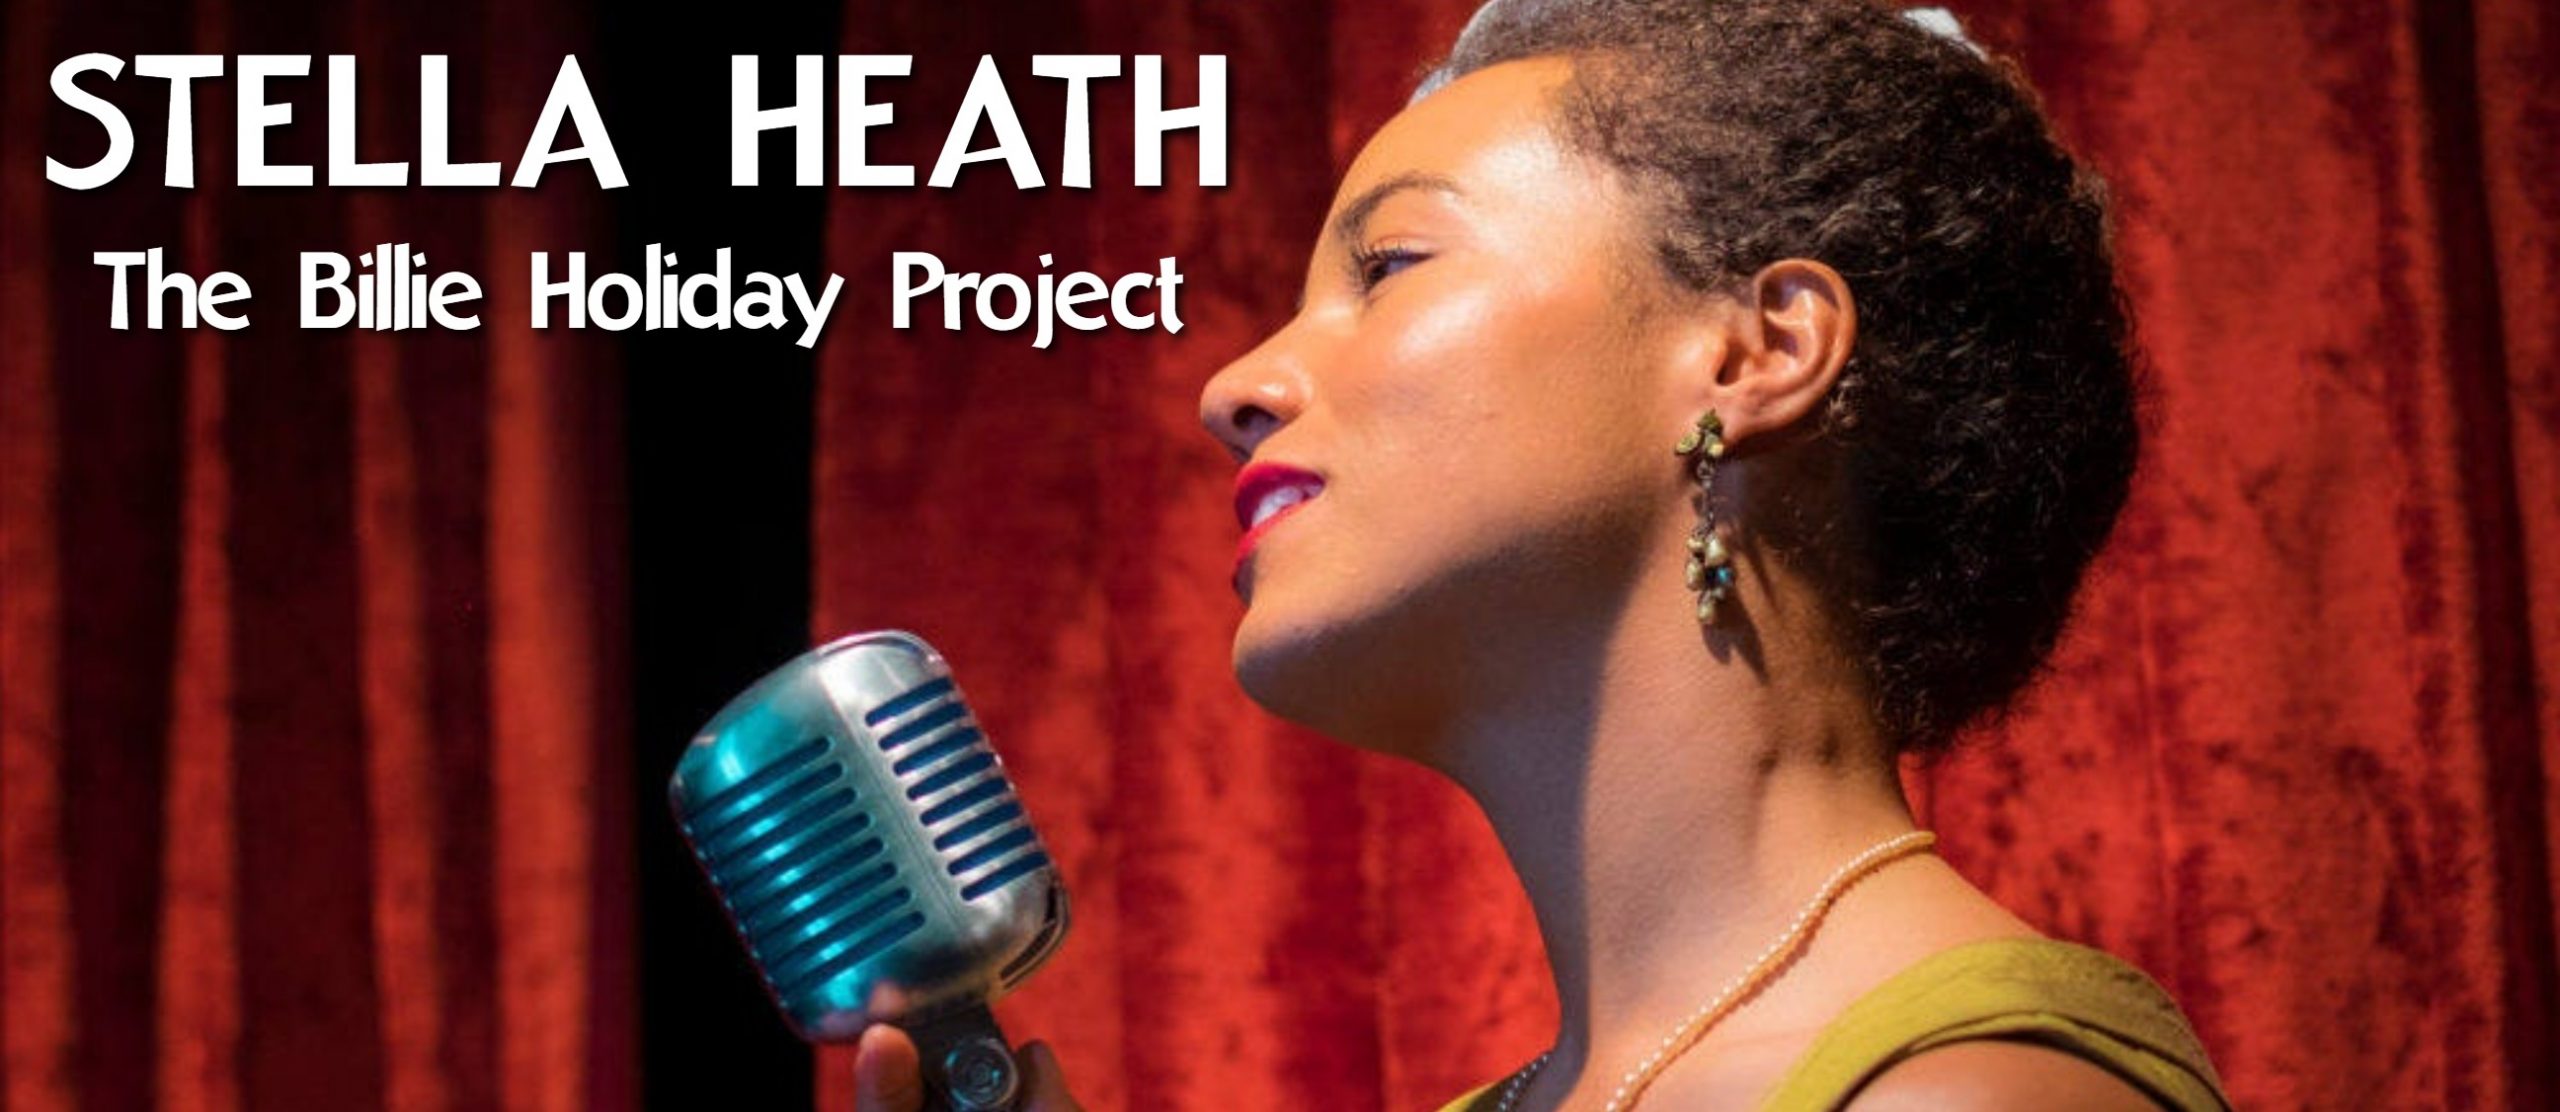 STELLA HEATH: The Billie Holiday Project